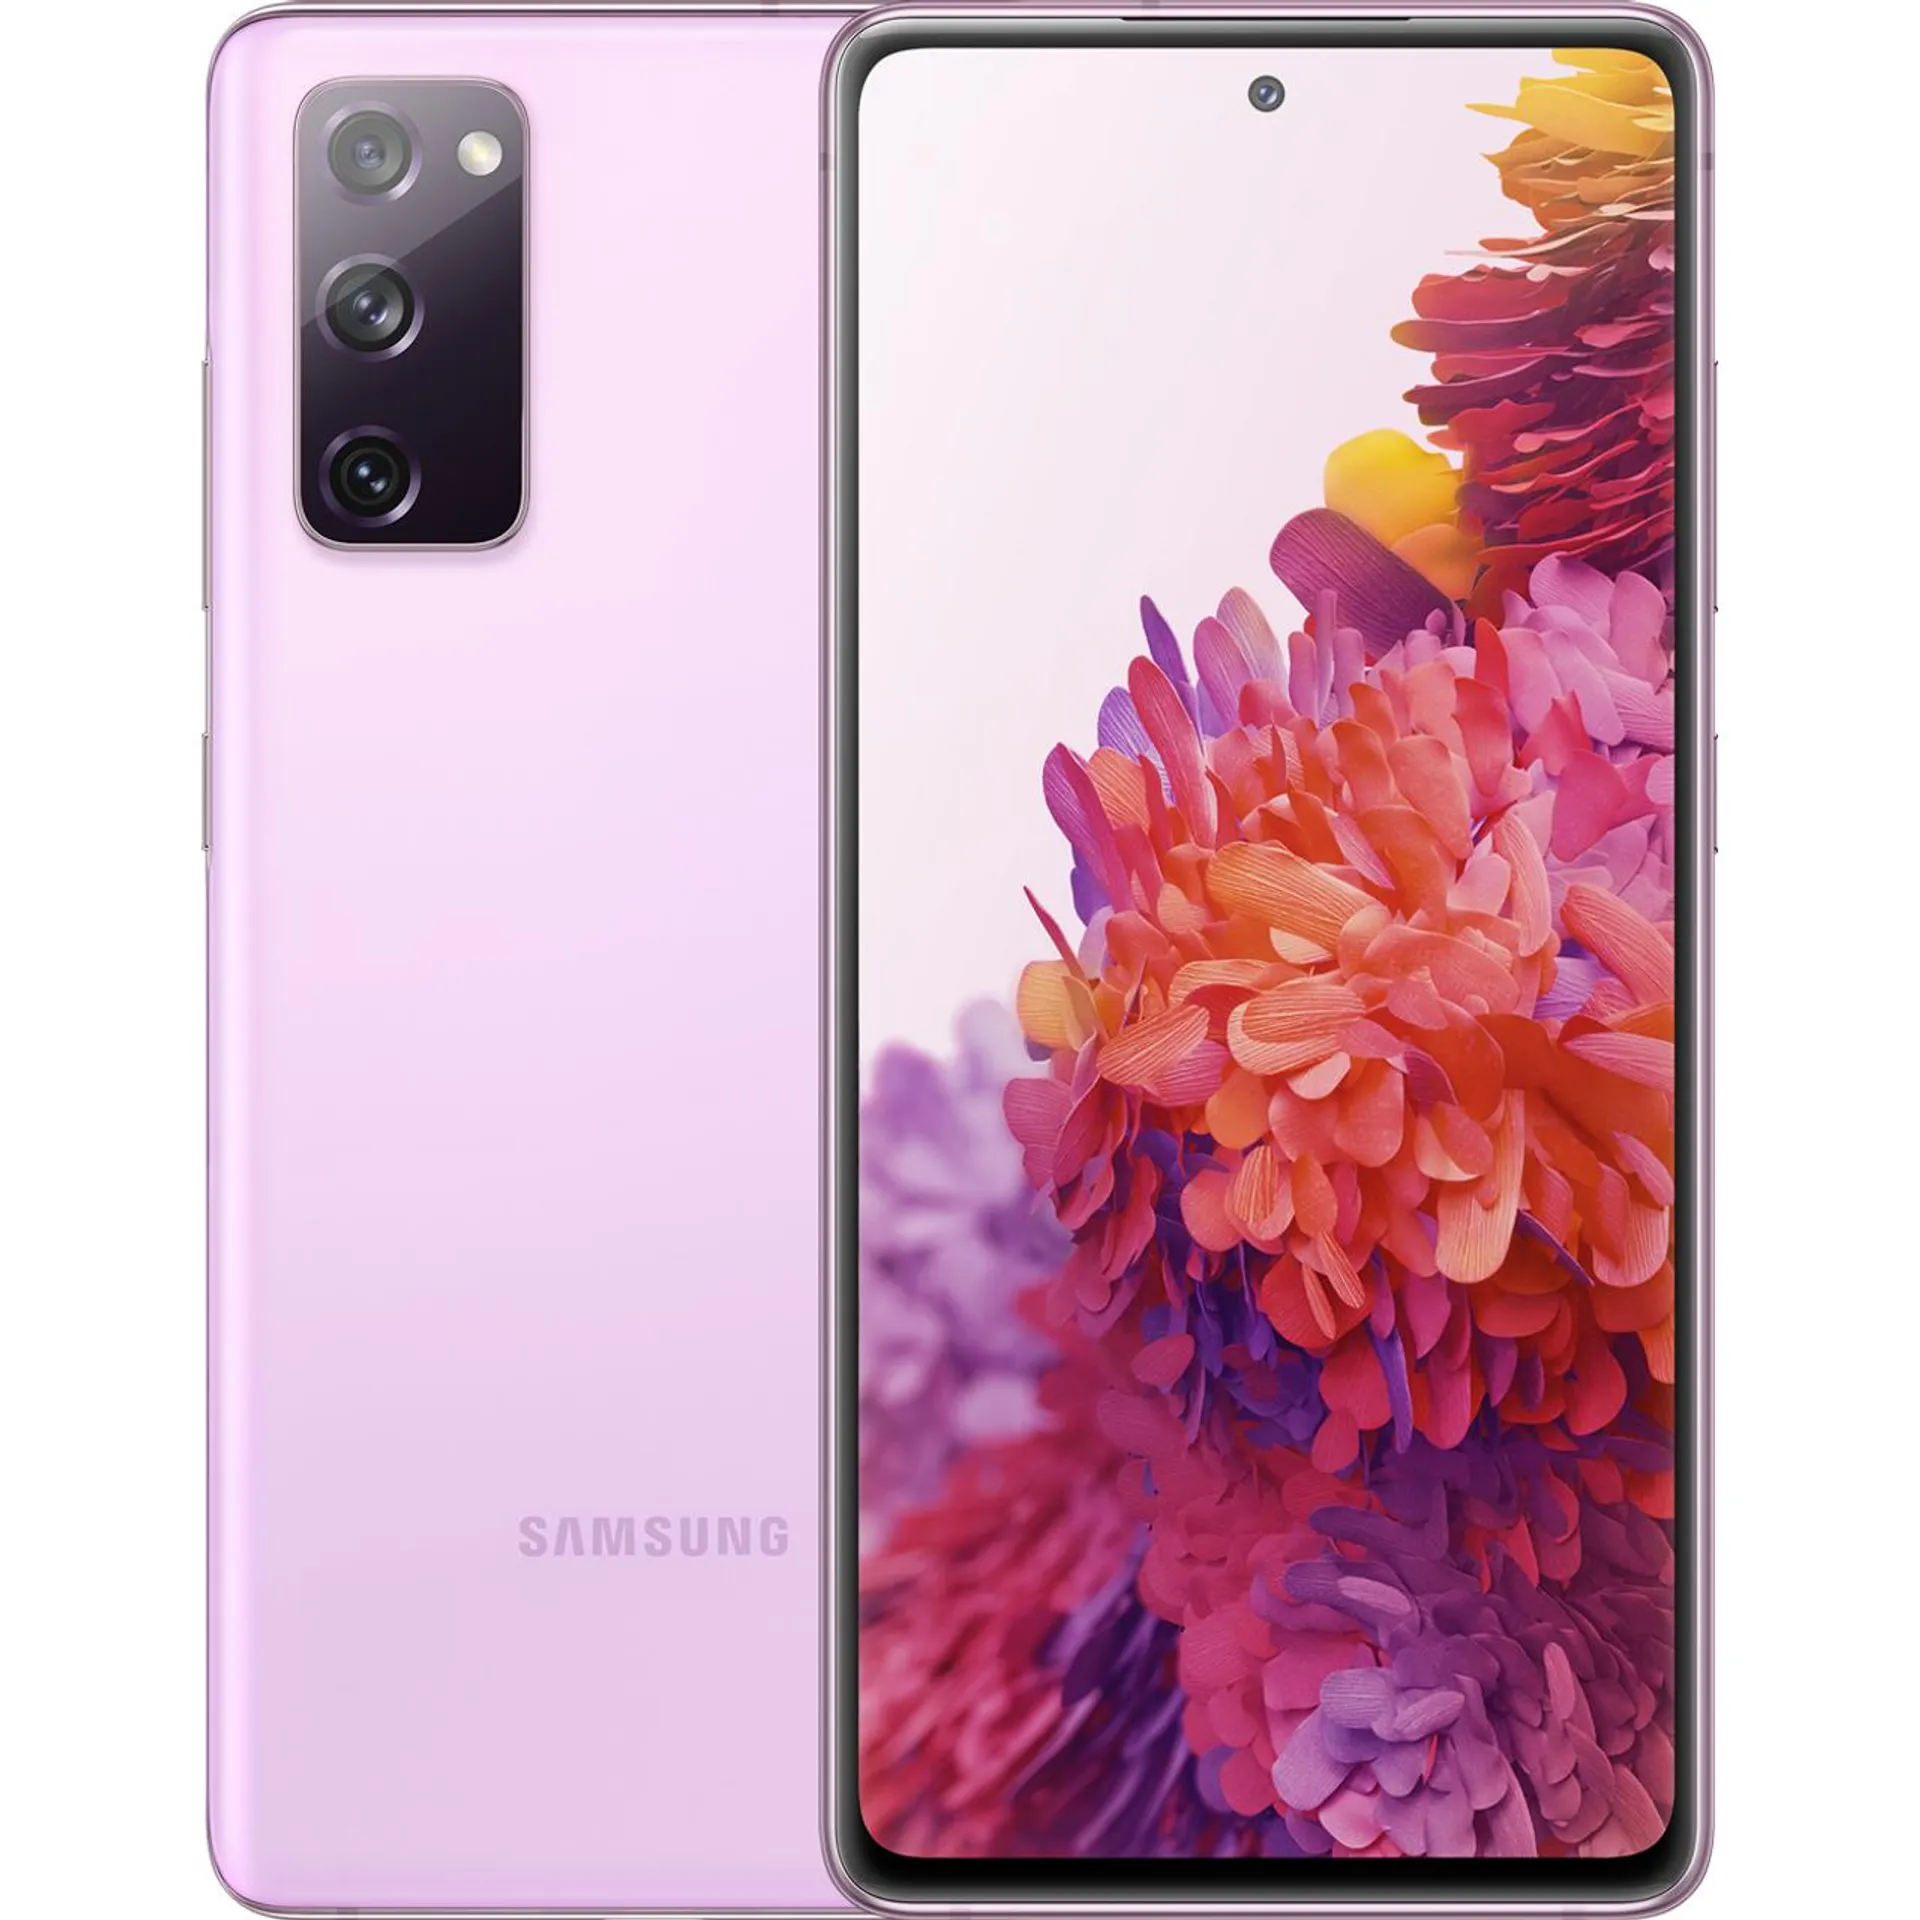 Samsung Galaxy S20 FE 5G 128GB Smartphone in Cloud Lavender